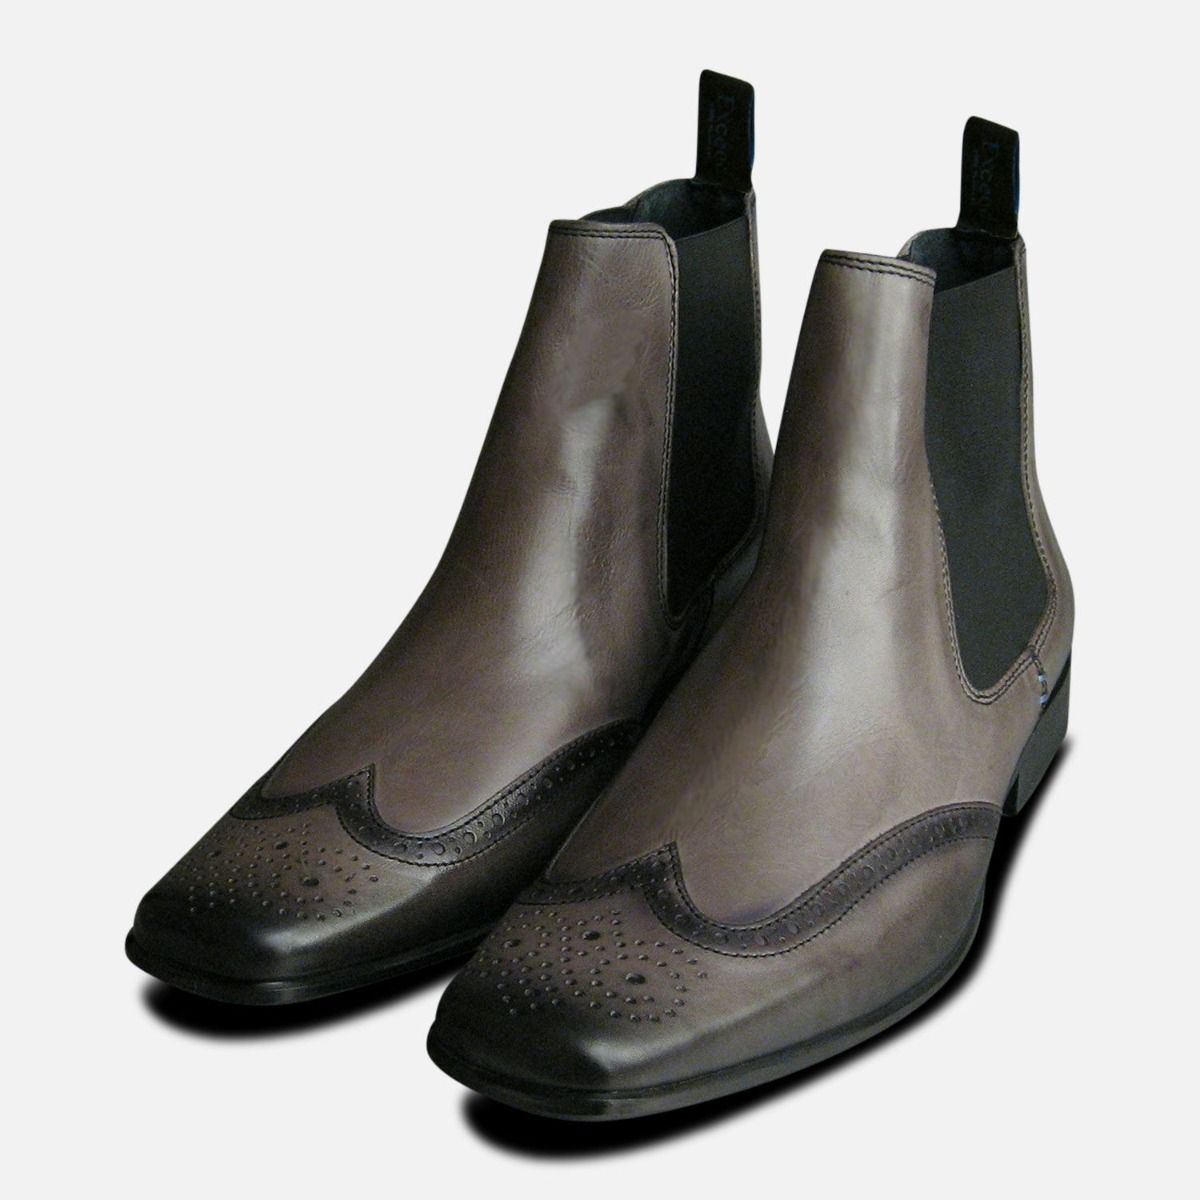 chelsea shoes for men